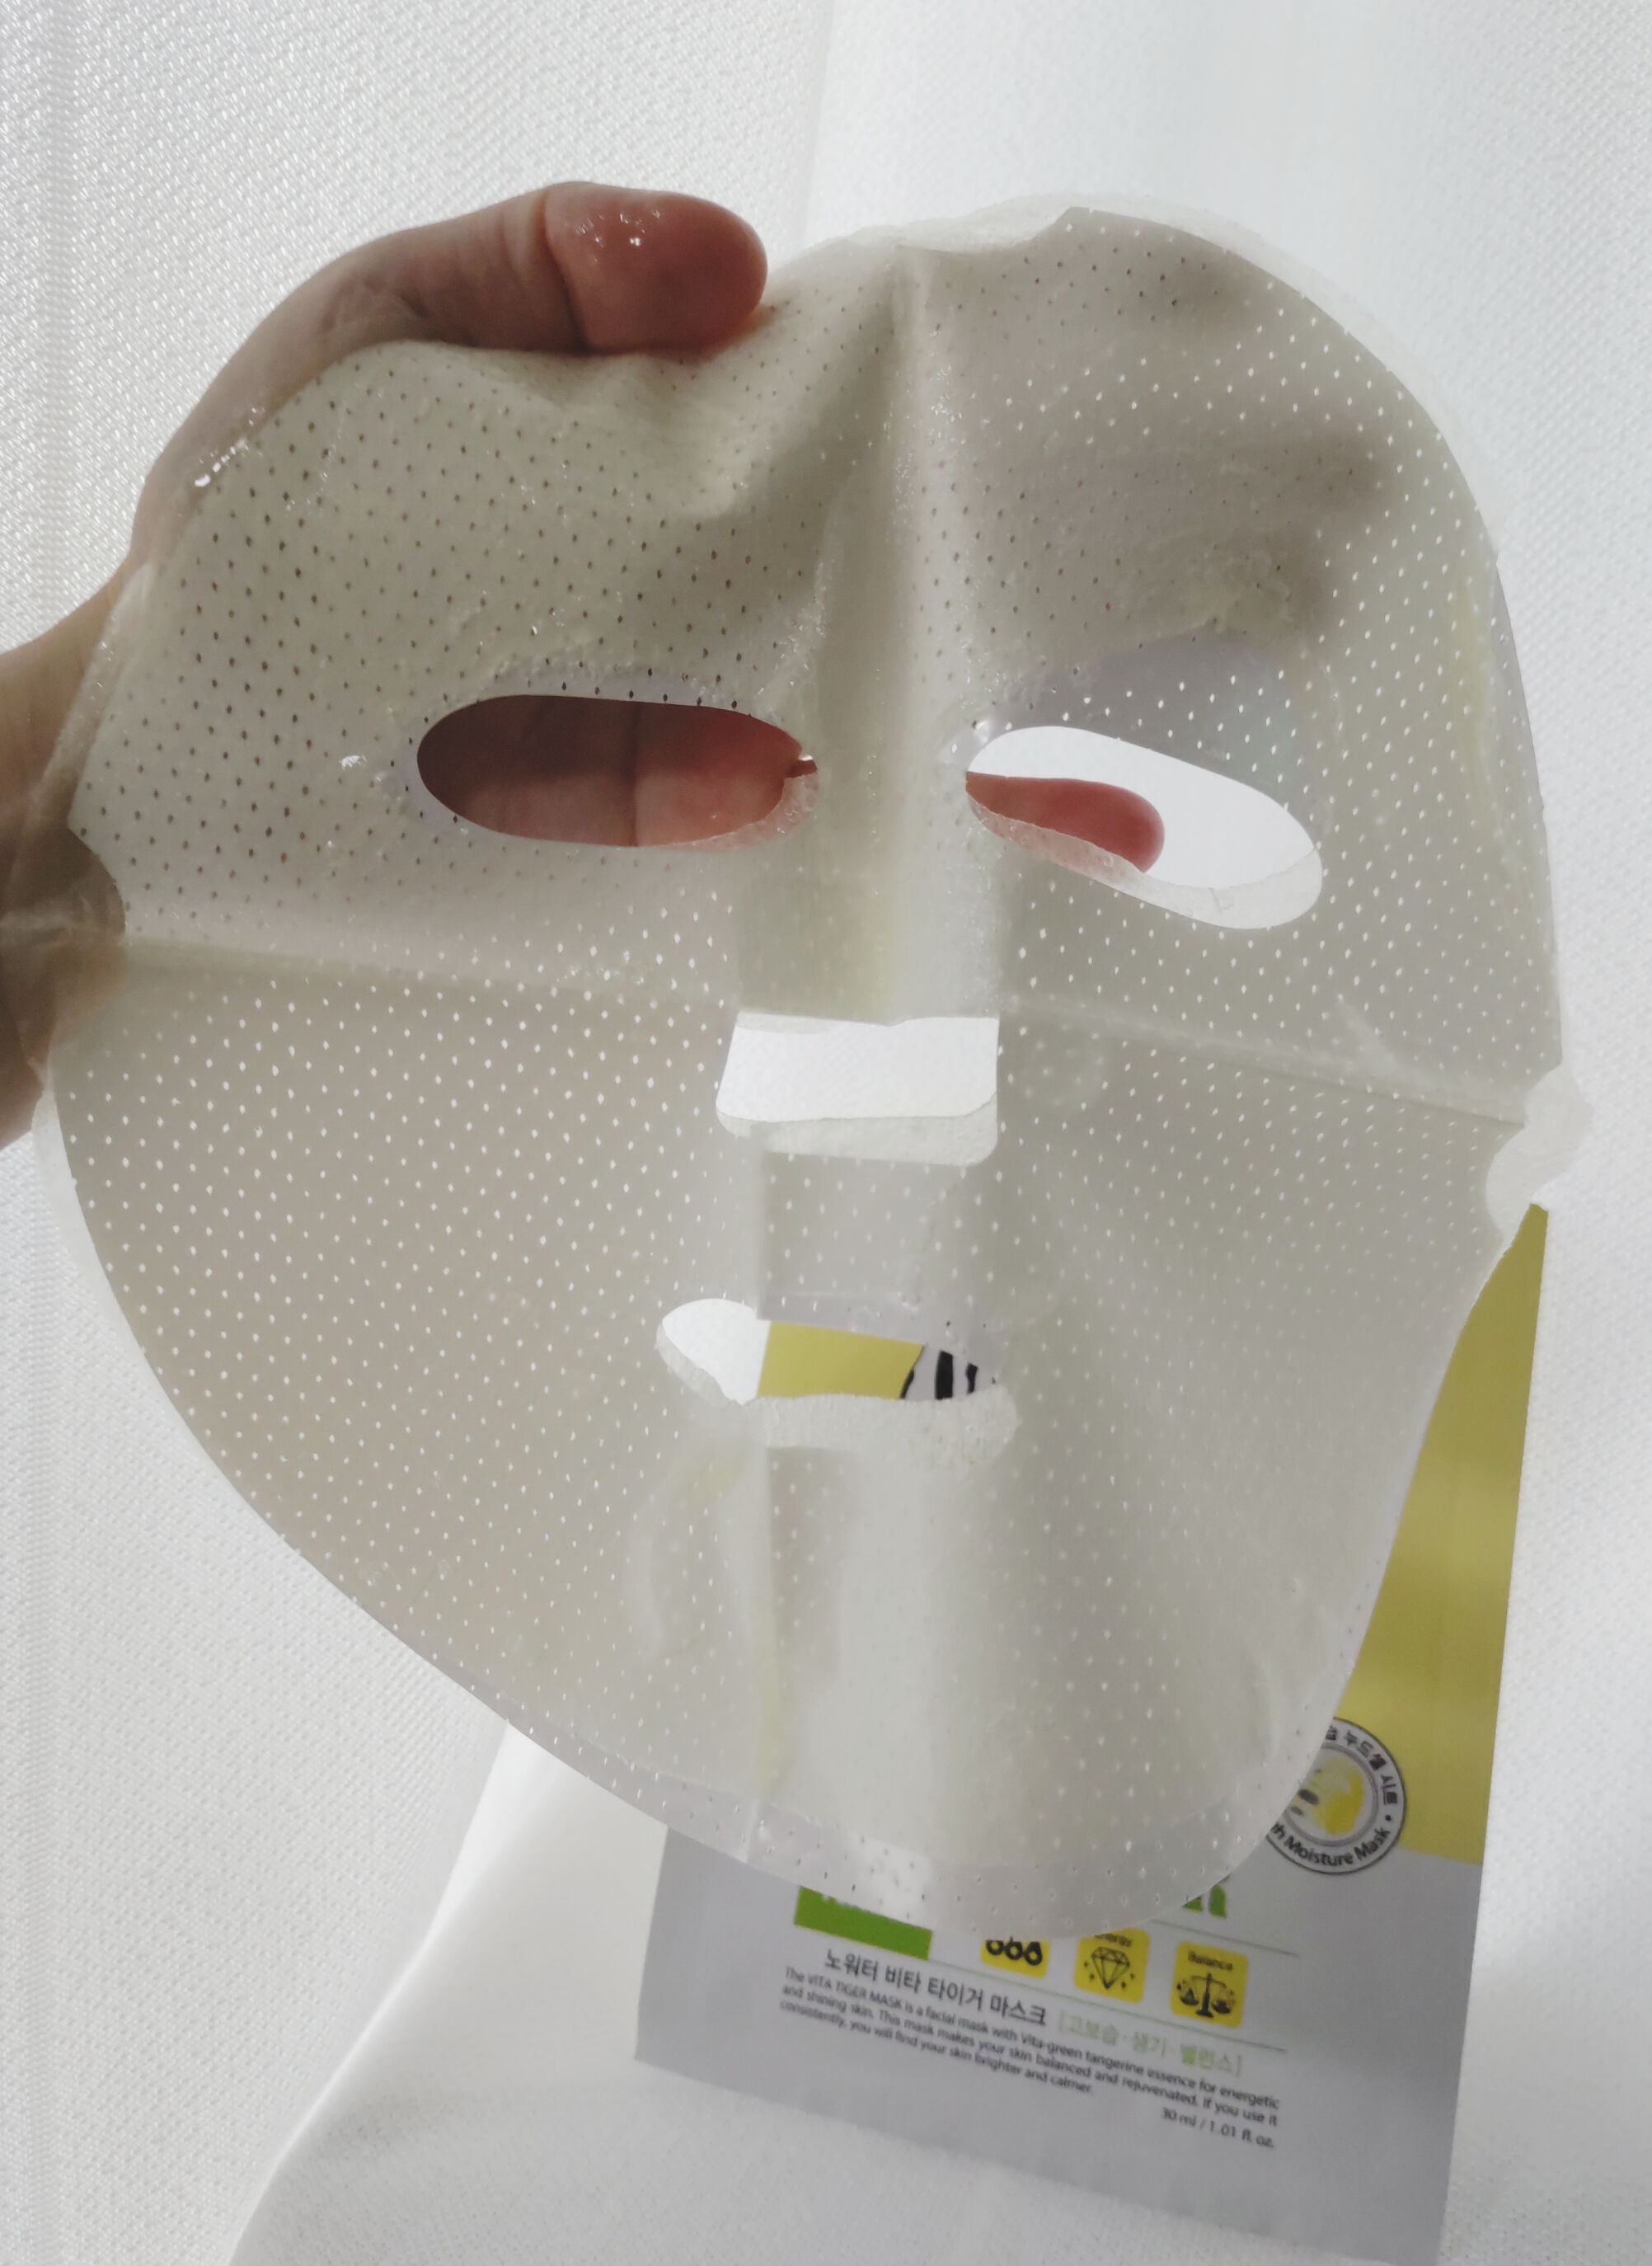 NOWATER(ノーウォーター) ビタタイガーマスクの良い点・メリットに関する恵未さんの口コミ画像3